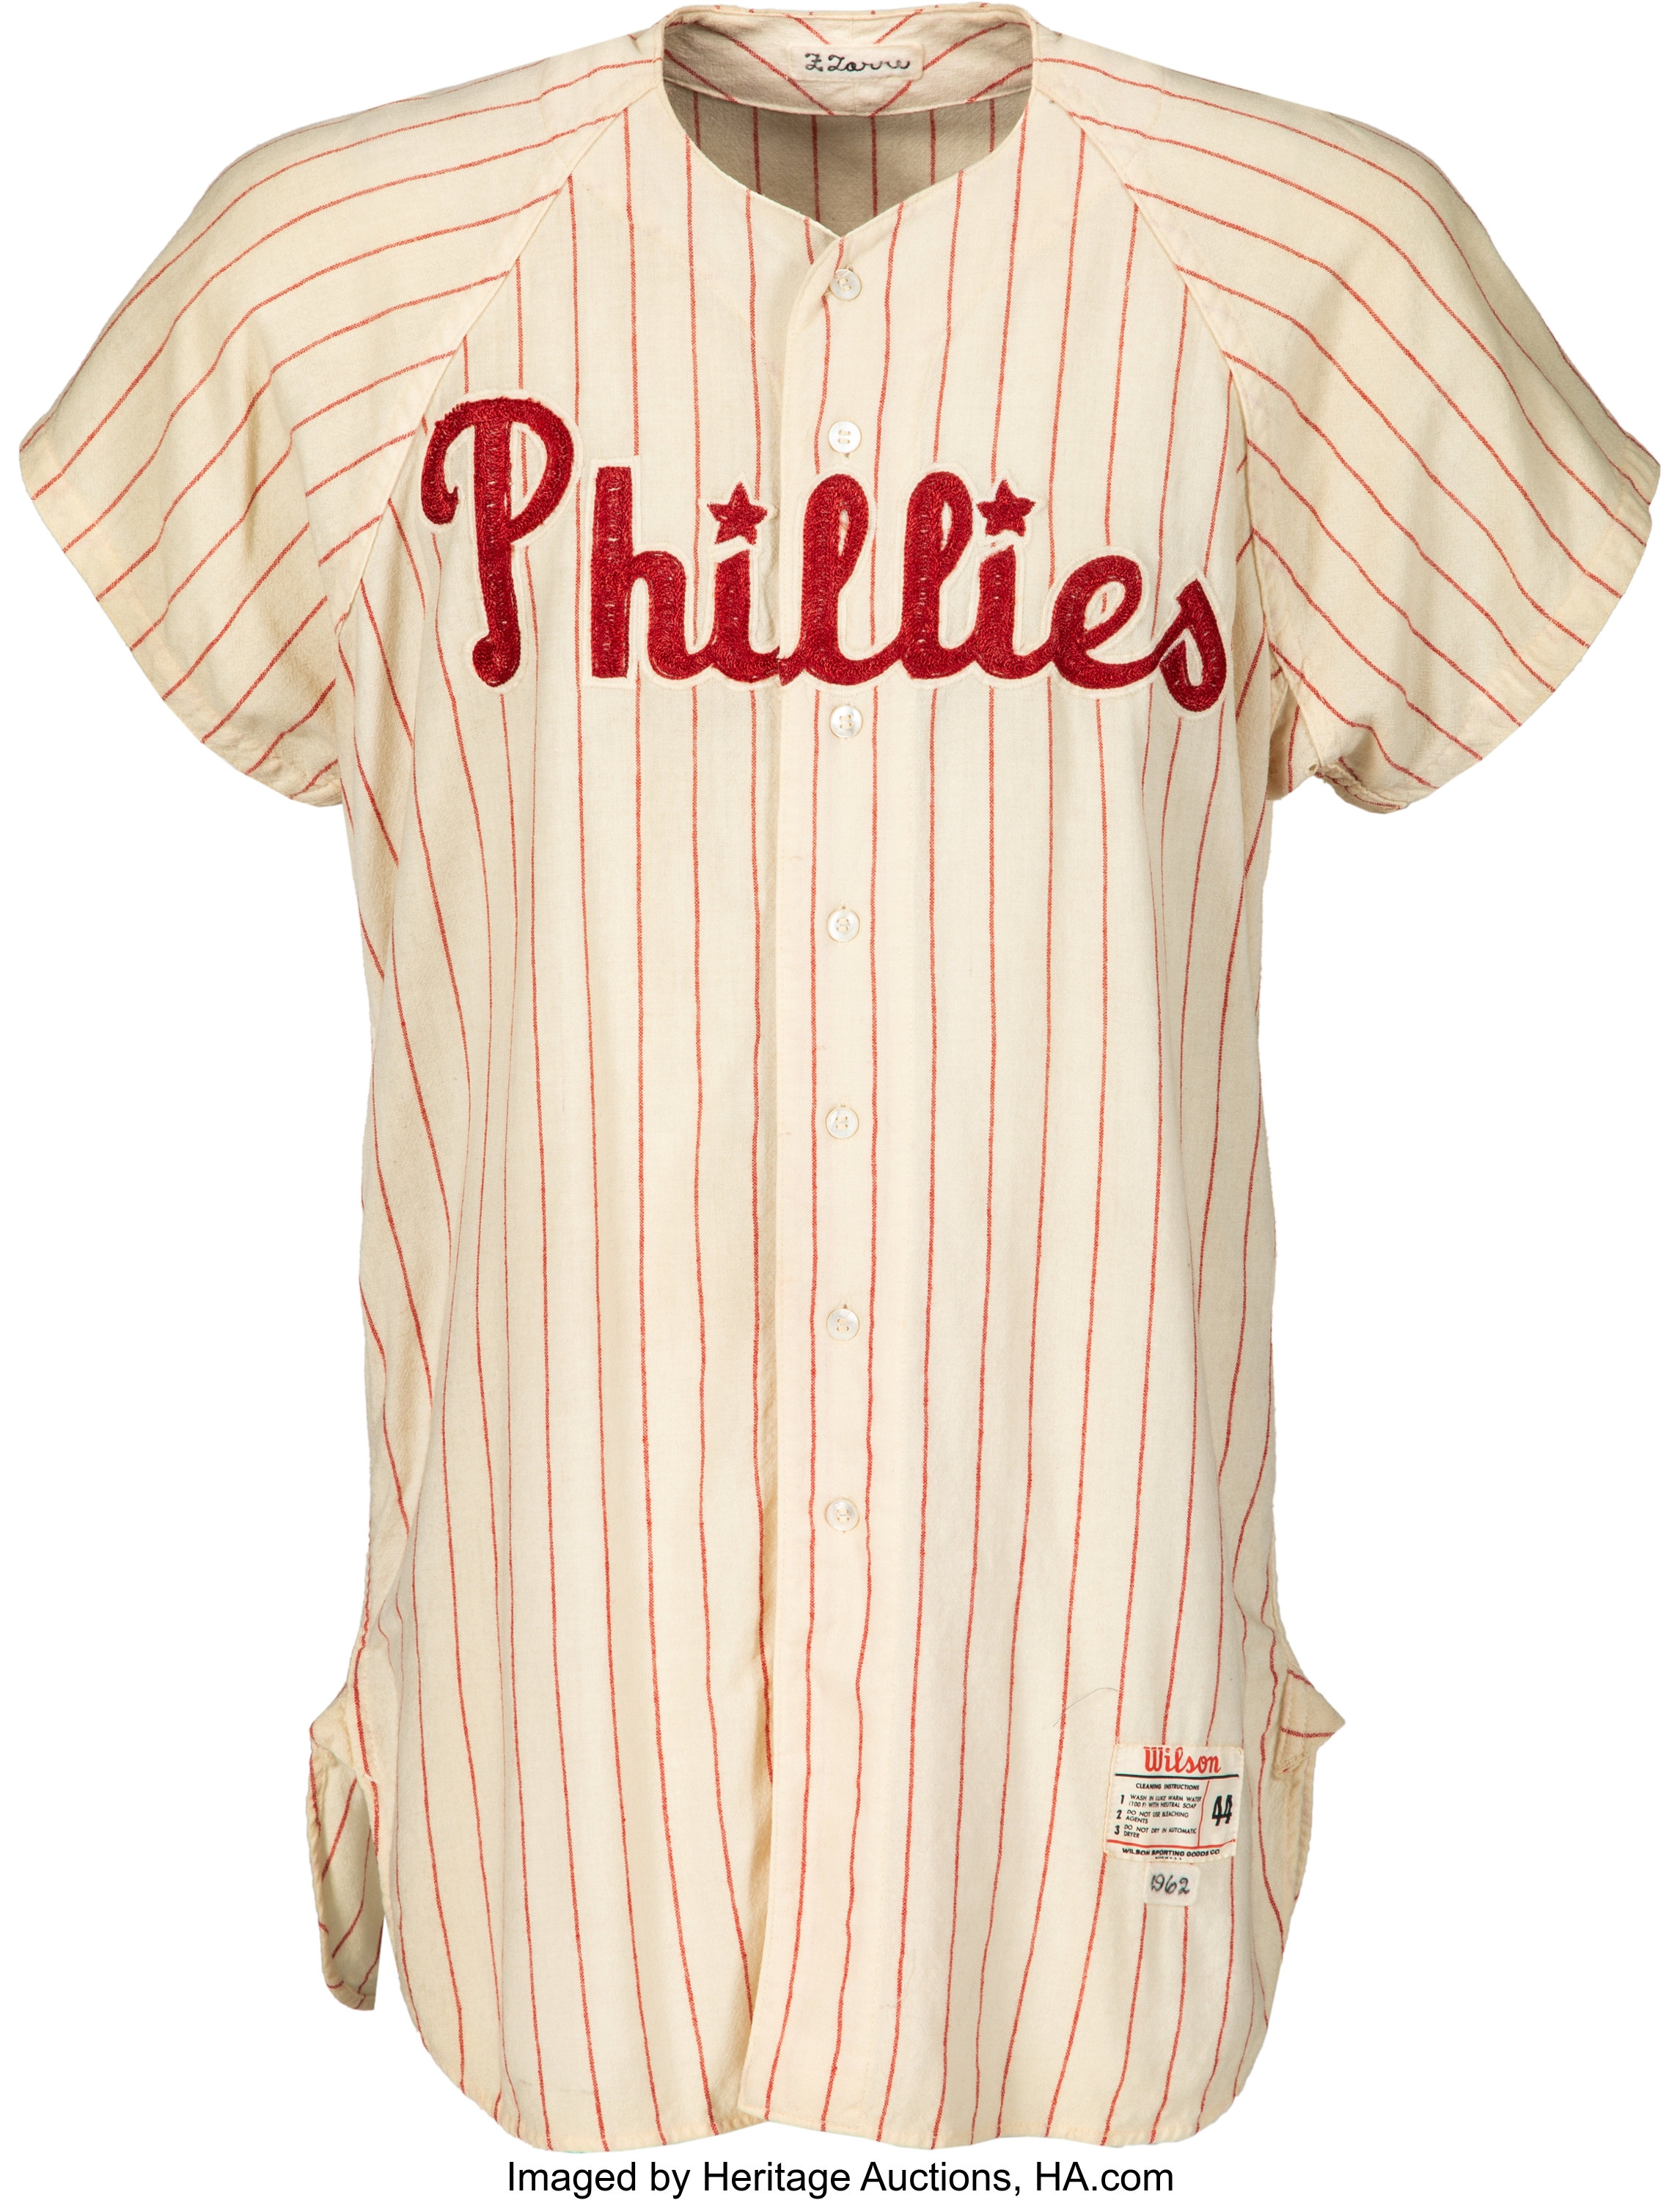 Philadelphia Phillies Jerseys, Phillies Baseball Jerseys, Uniforms